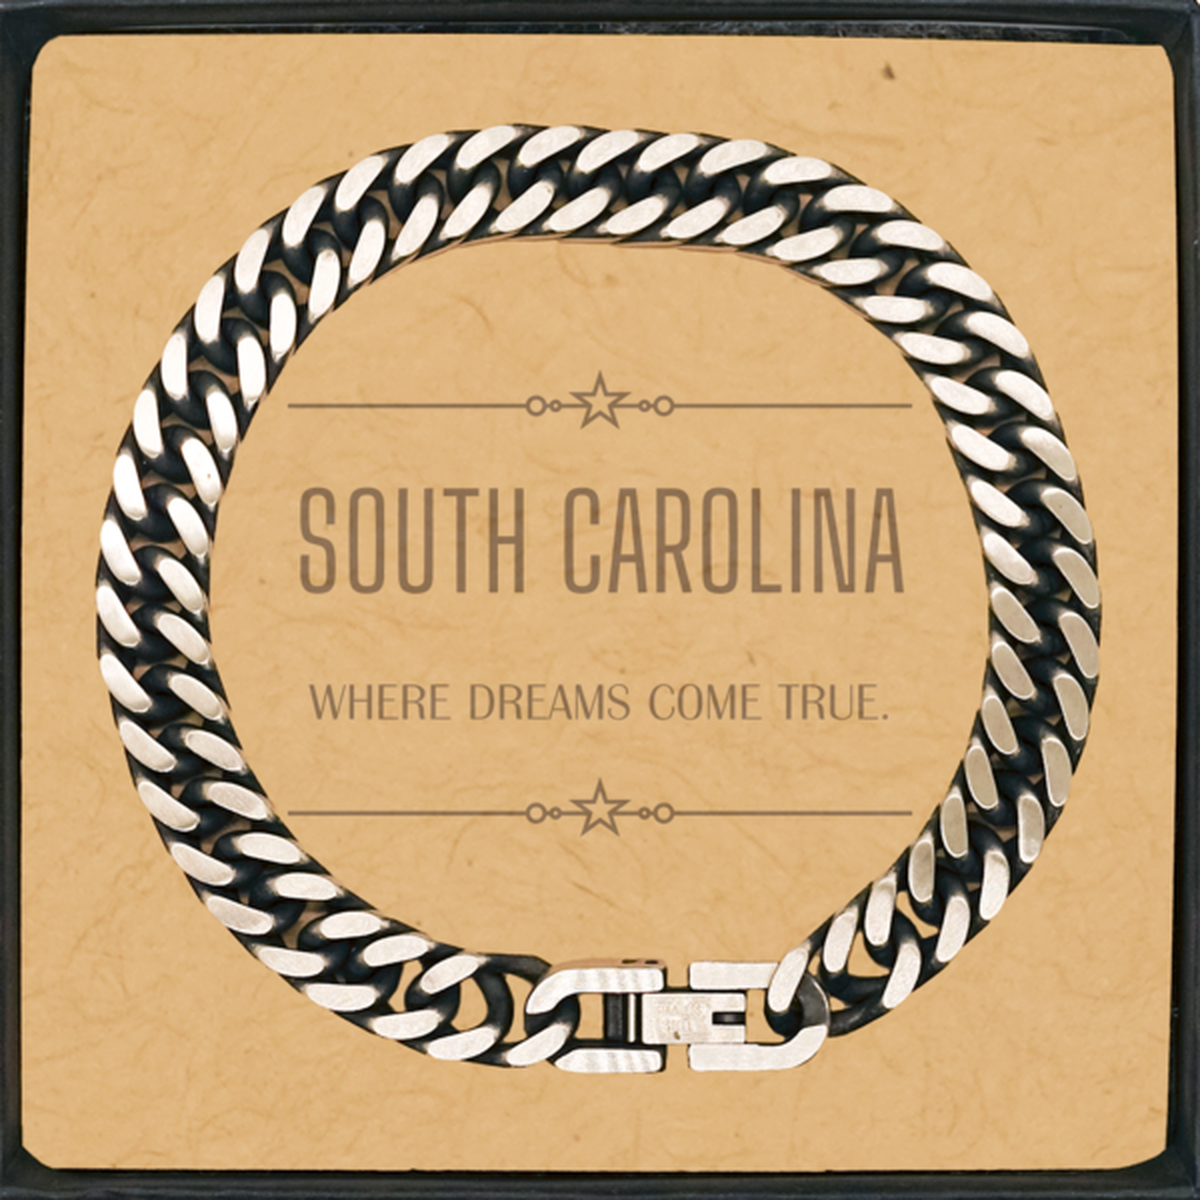 Love South Carolina State Cuban Link Chain Bracelet, South Carolina Where dreams come true, Birthday Inspirational Gifts For South Carolina Men, Women, Friends